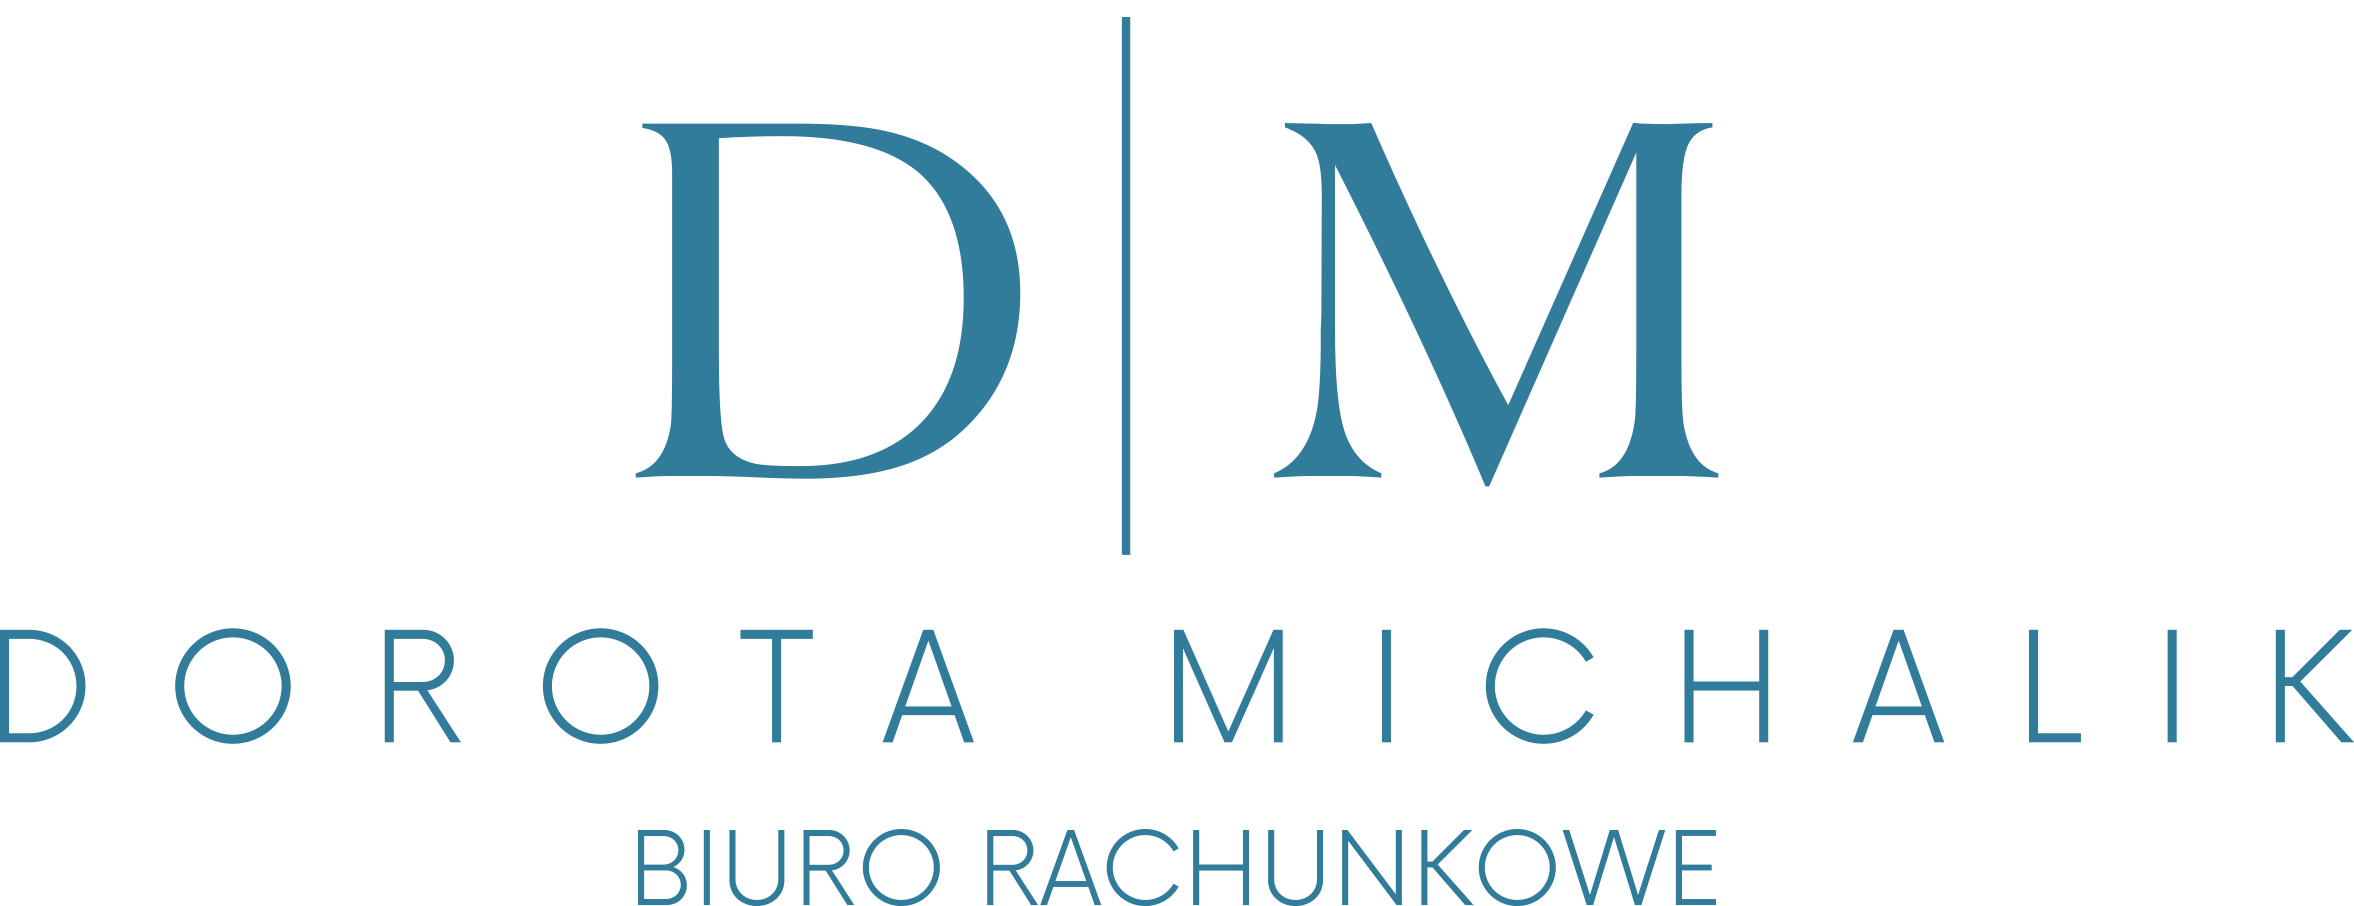 Michalik Dorota_logo-1